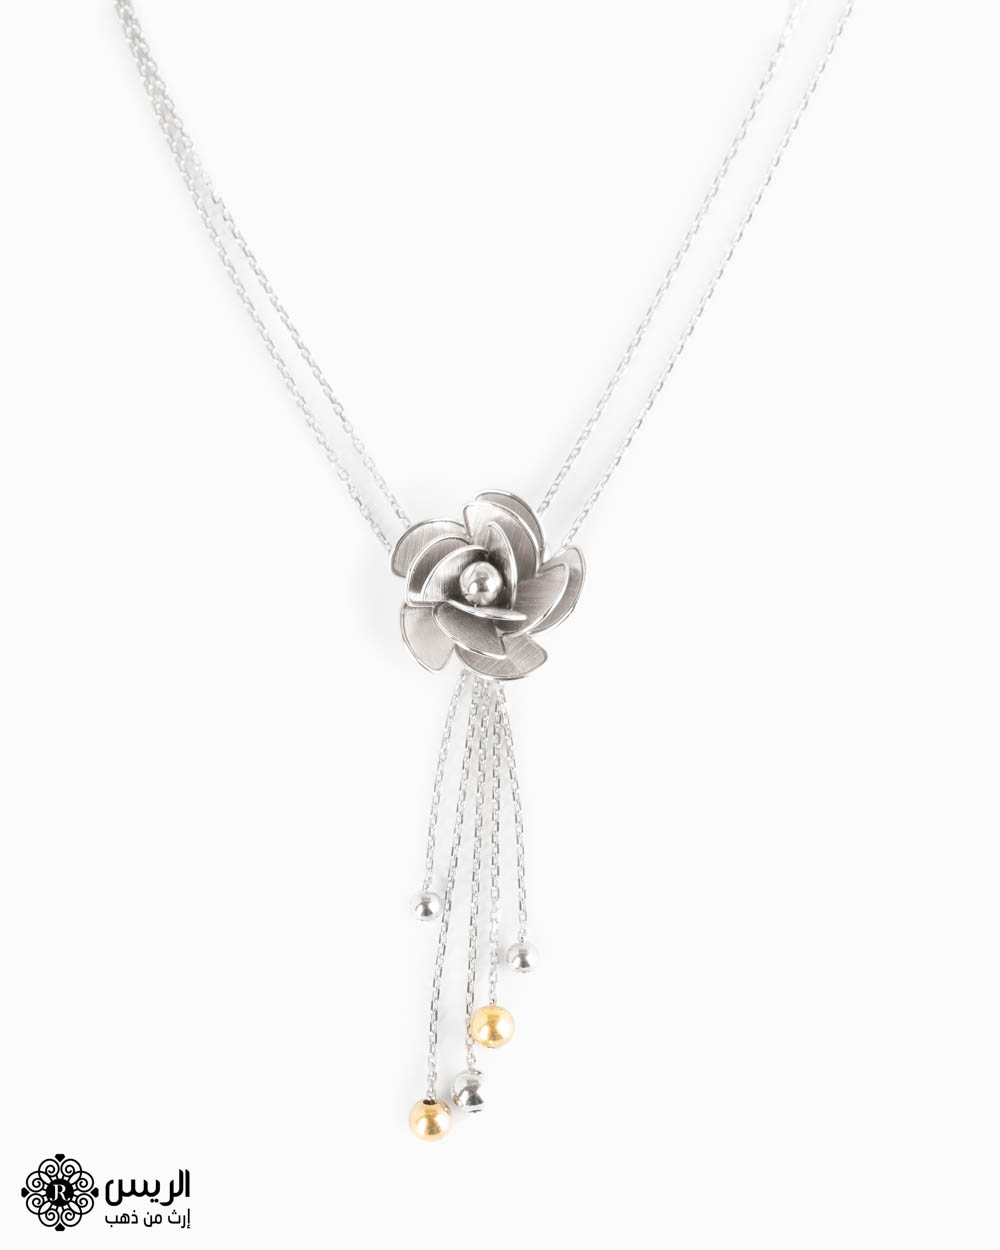 Raies jewelry Necklace Italian Design عقد تصميم إيطالي الريس للمجوهرات